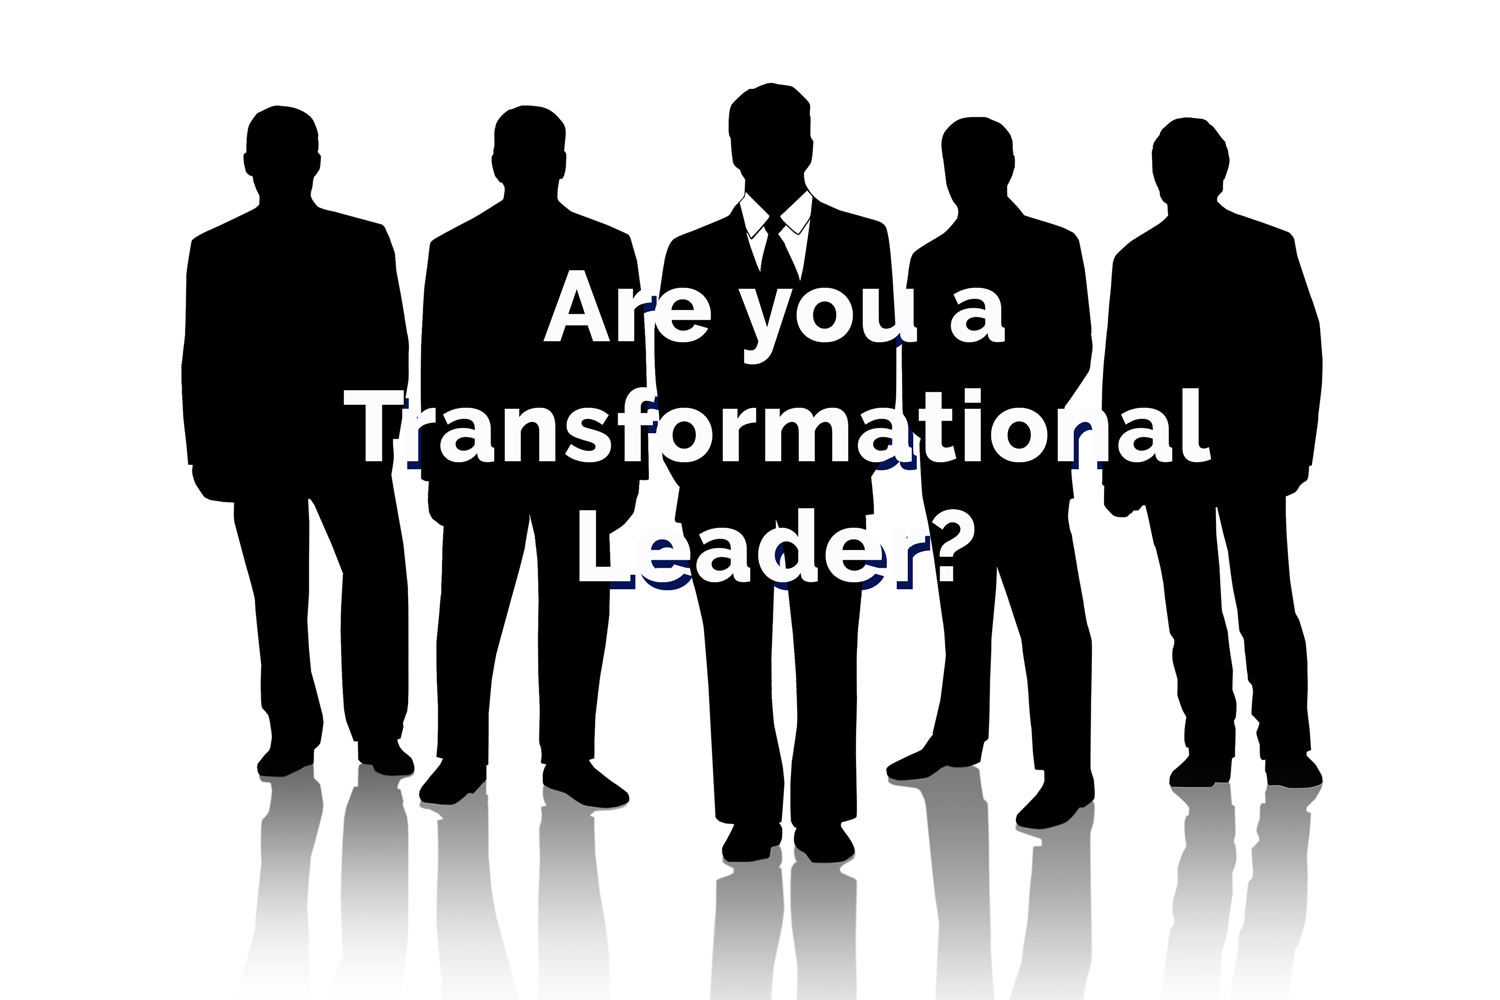 Transformational Leader vs Transactional Leader